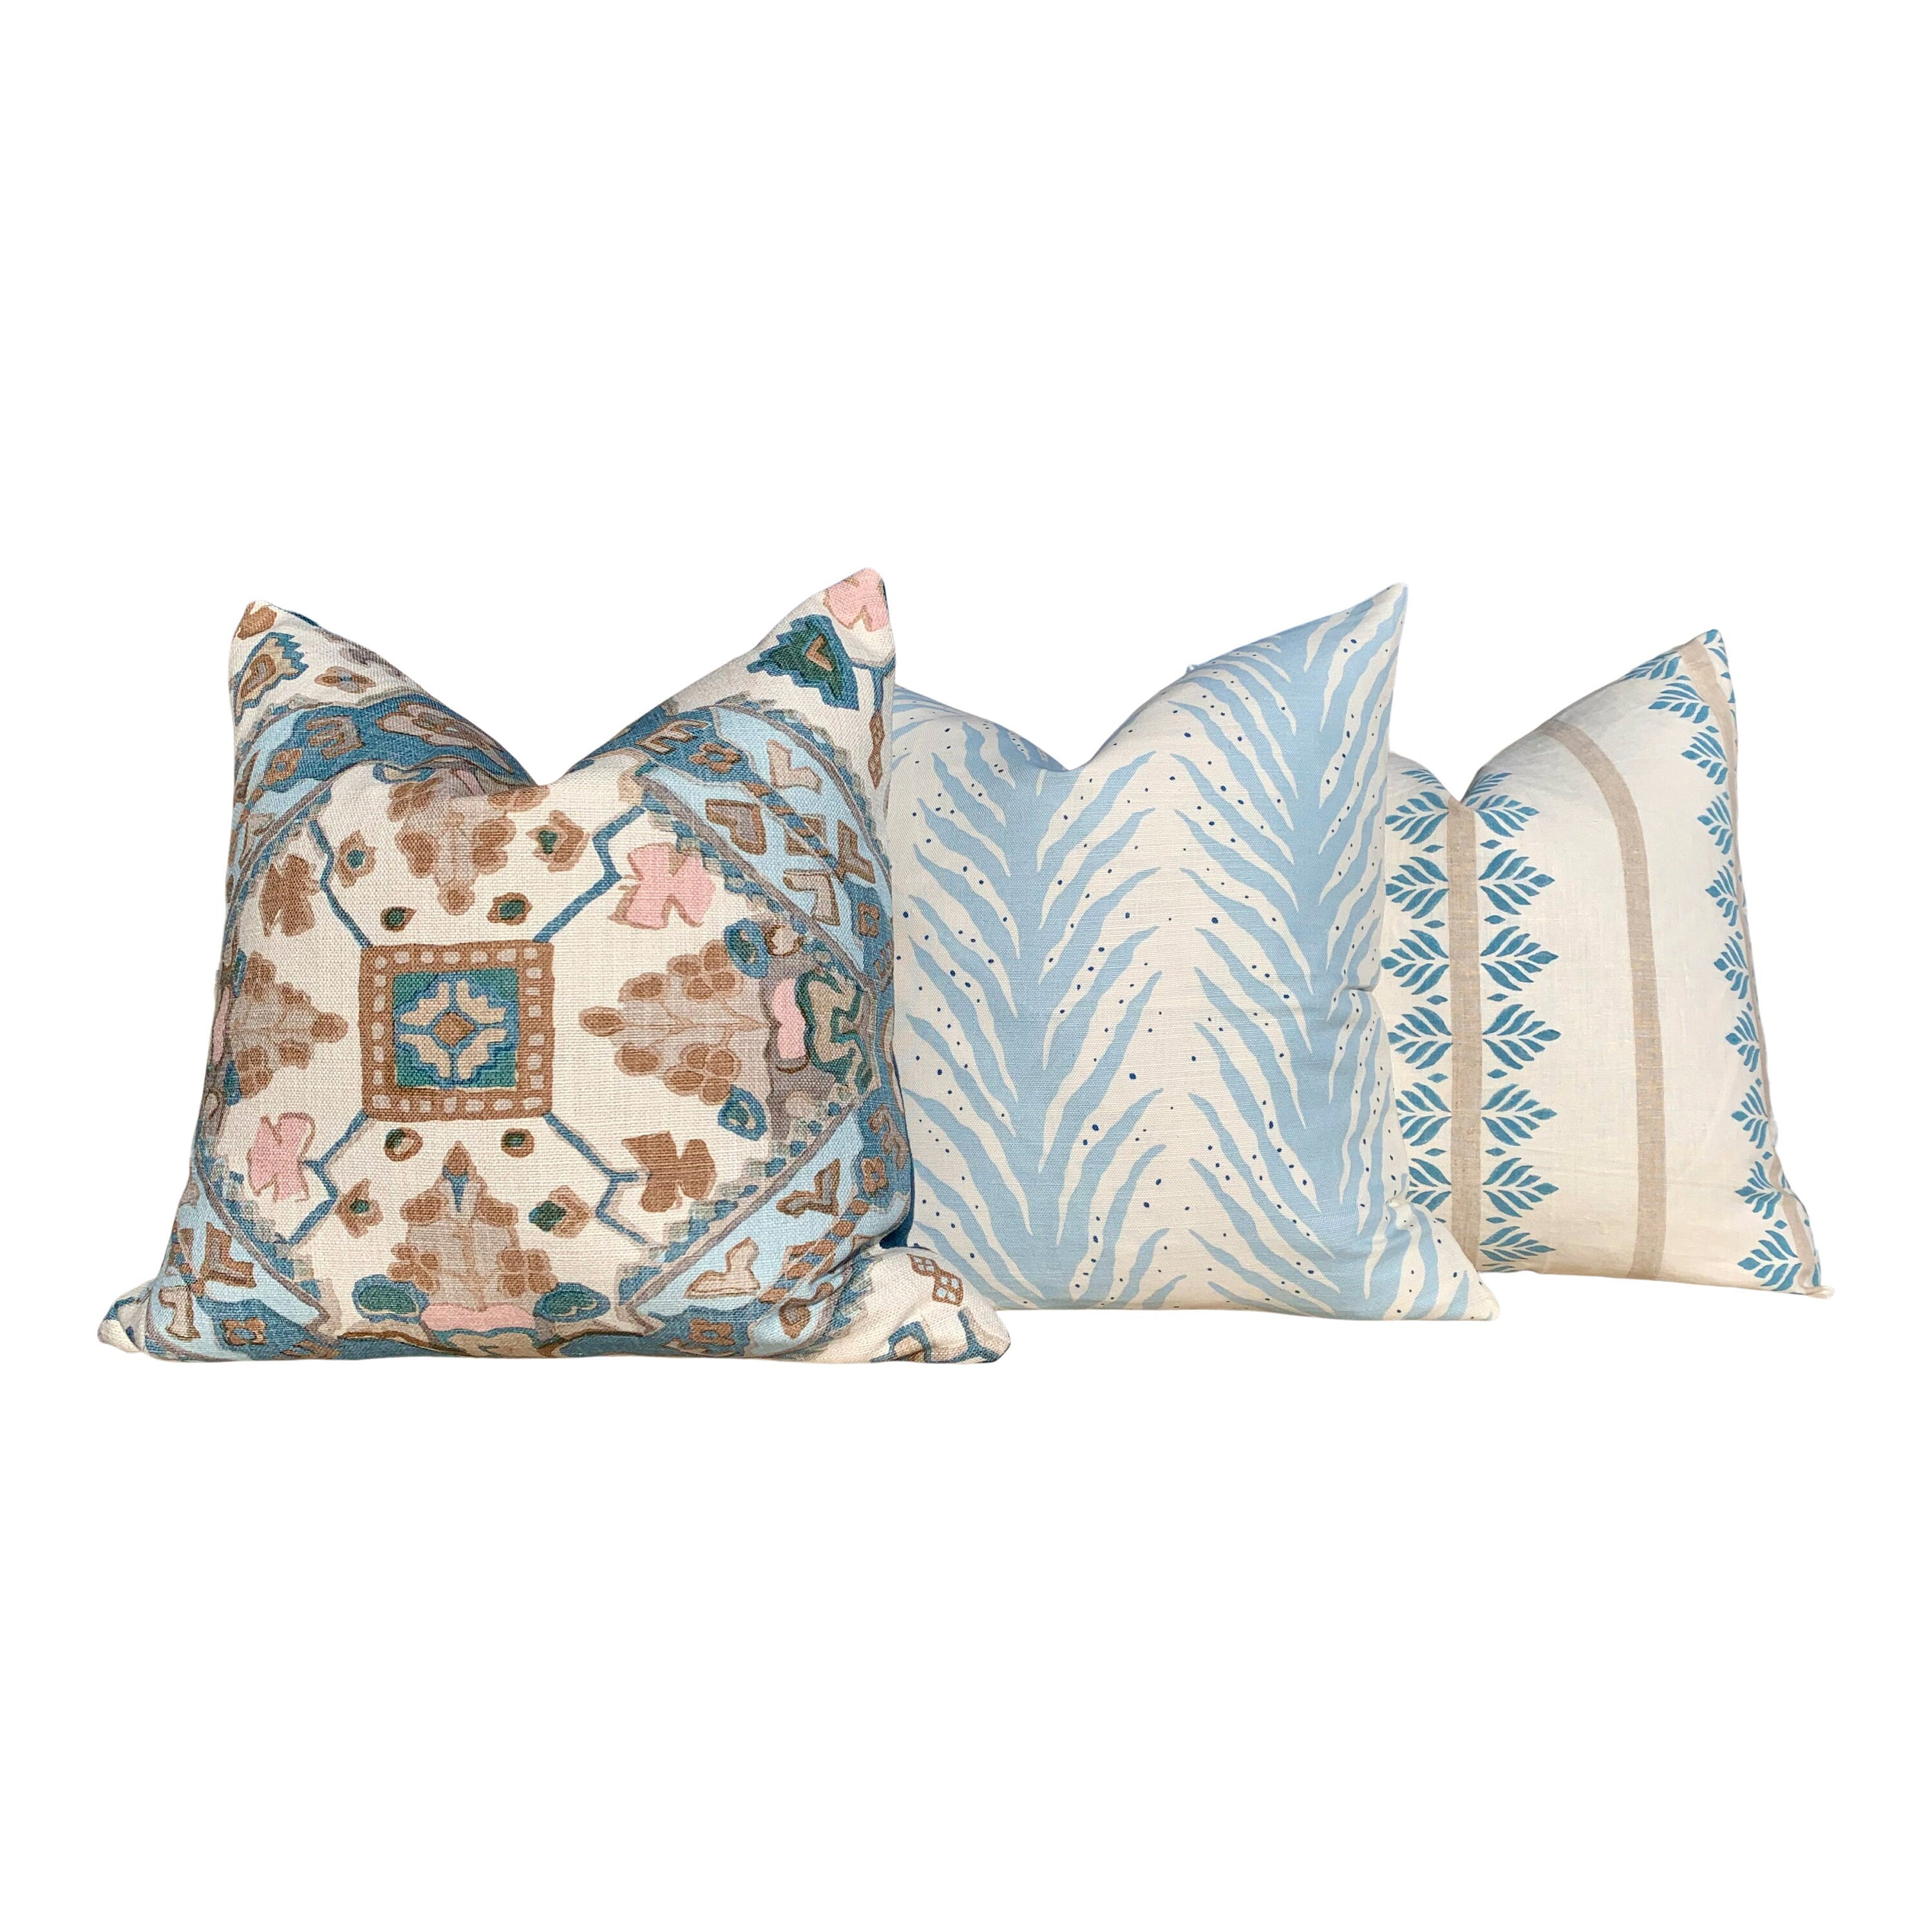 Thibaut Deco Mountain Linen Pillow in Spa Blue. Decorative Accent Pillow Cover, Geometric Lumbar Pillows in Spa Designer Throw Cushion Case